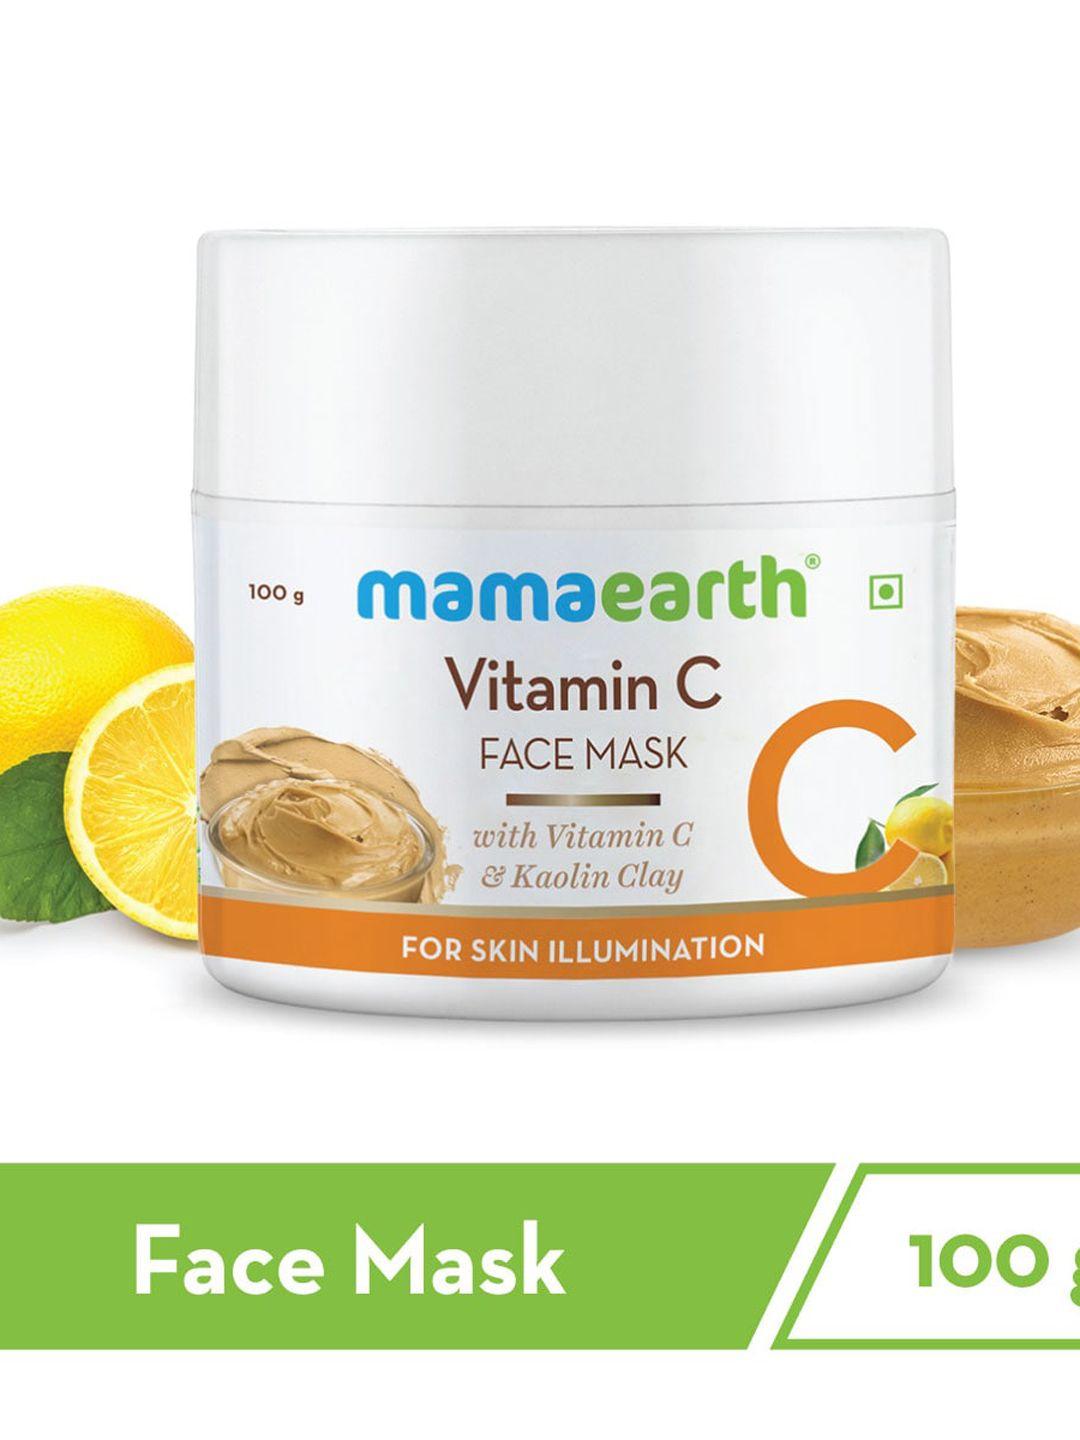 mamaearth vitamin c face mask with vitamin c & kaolin clay for skin illuminitation - 100 g